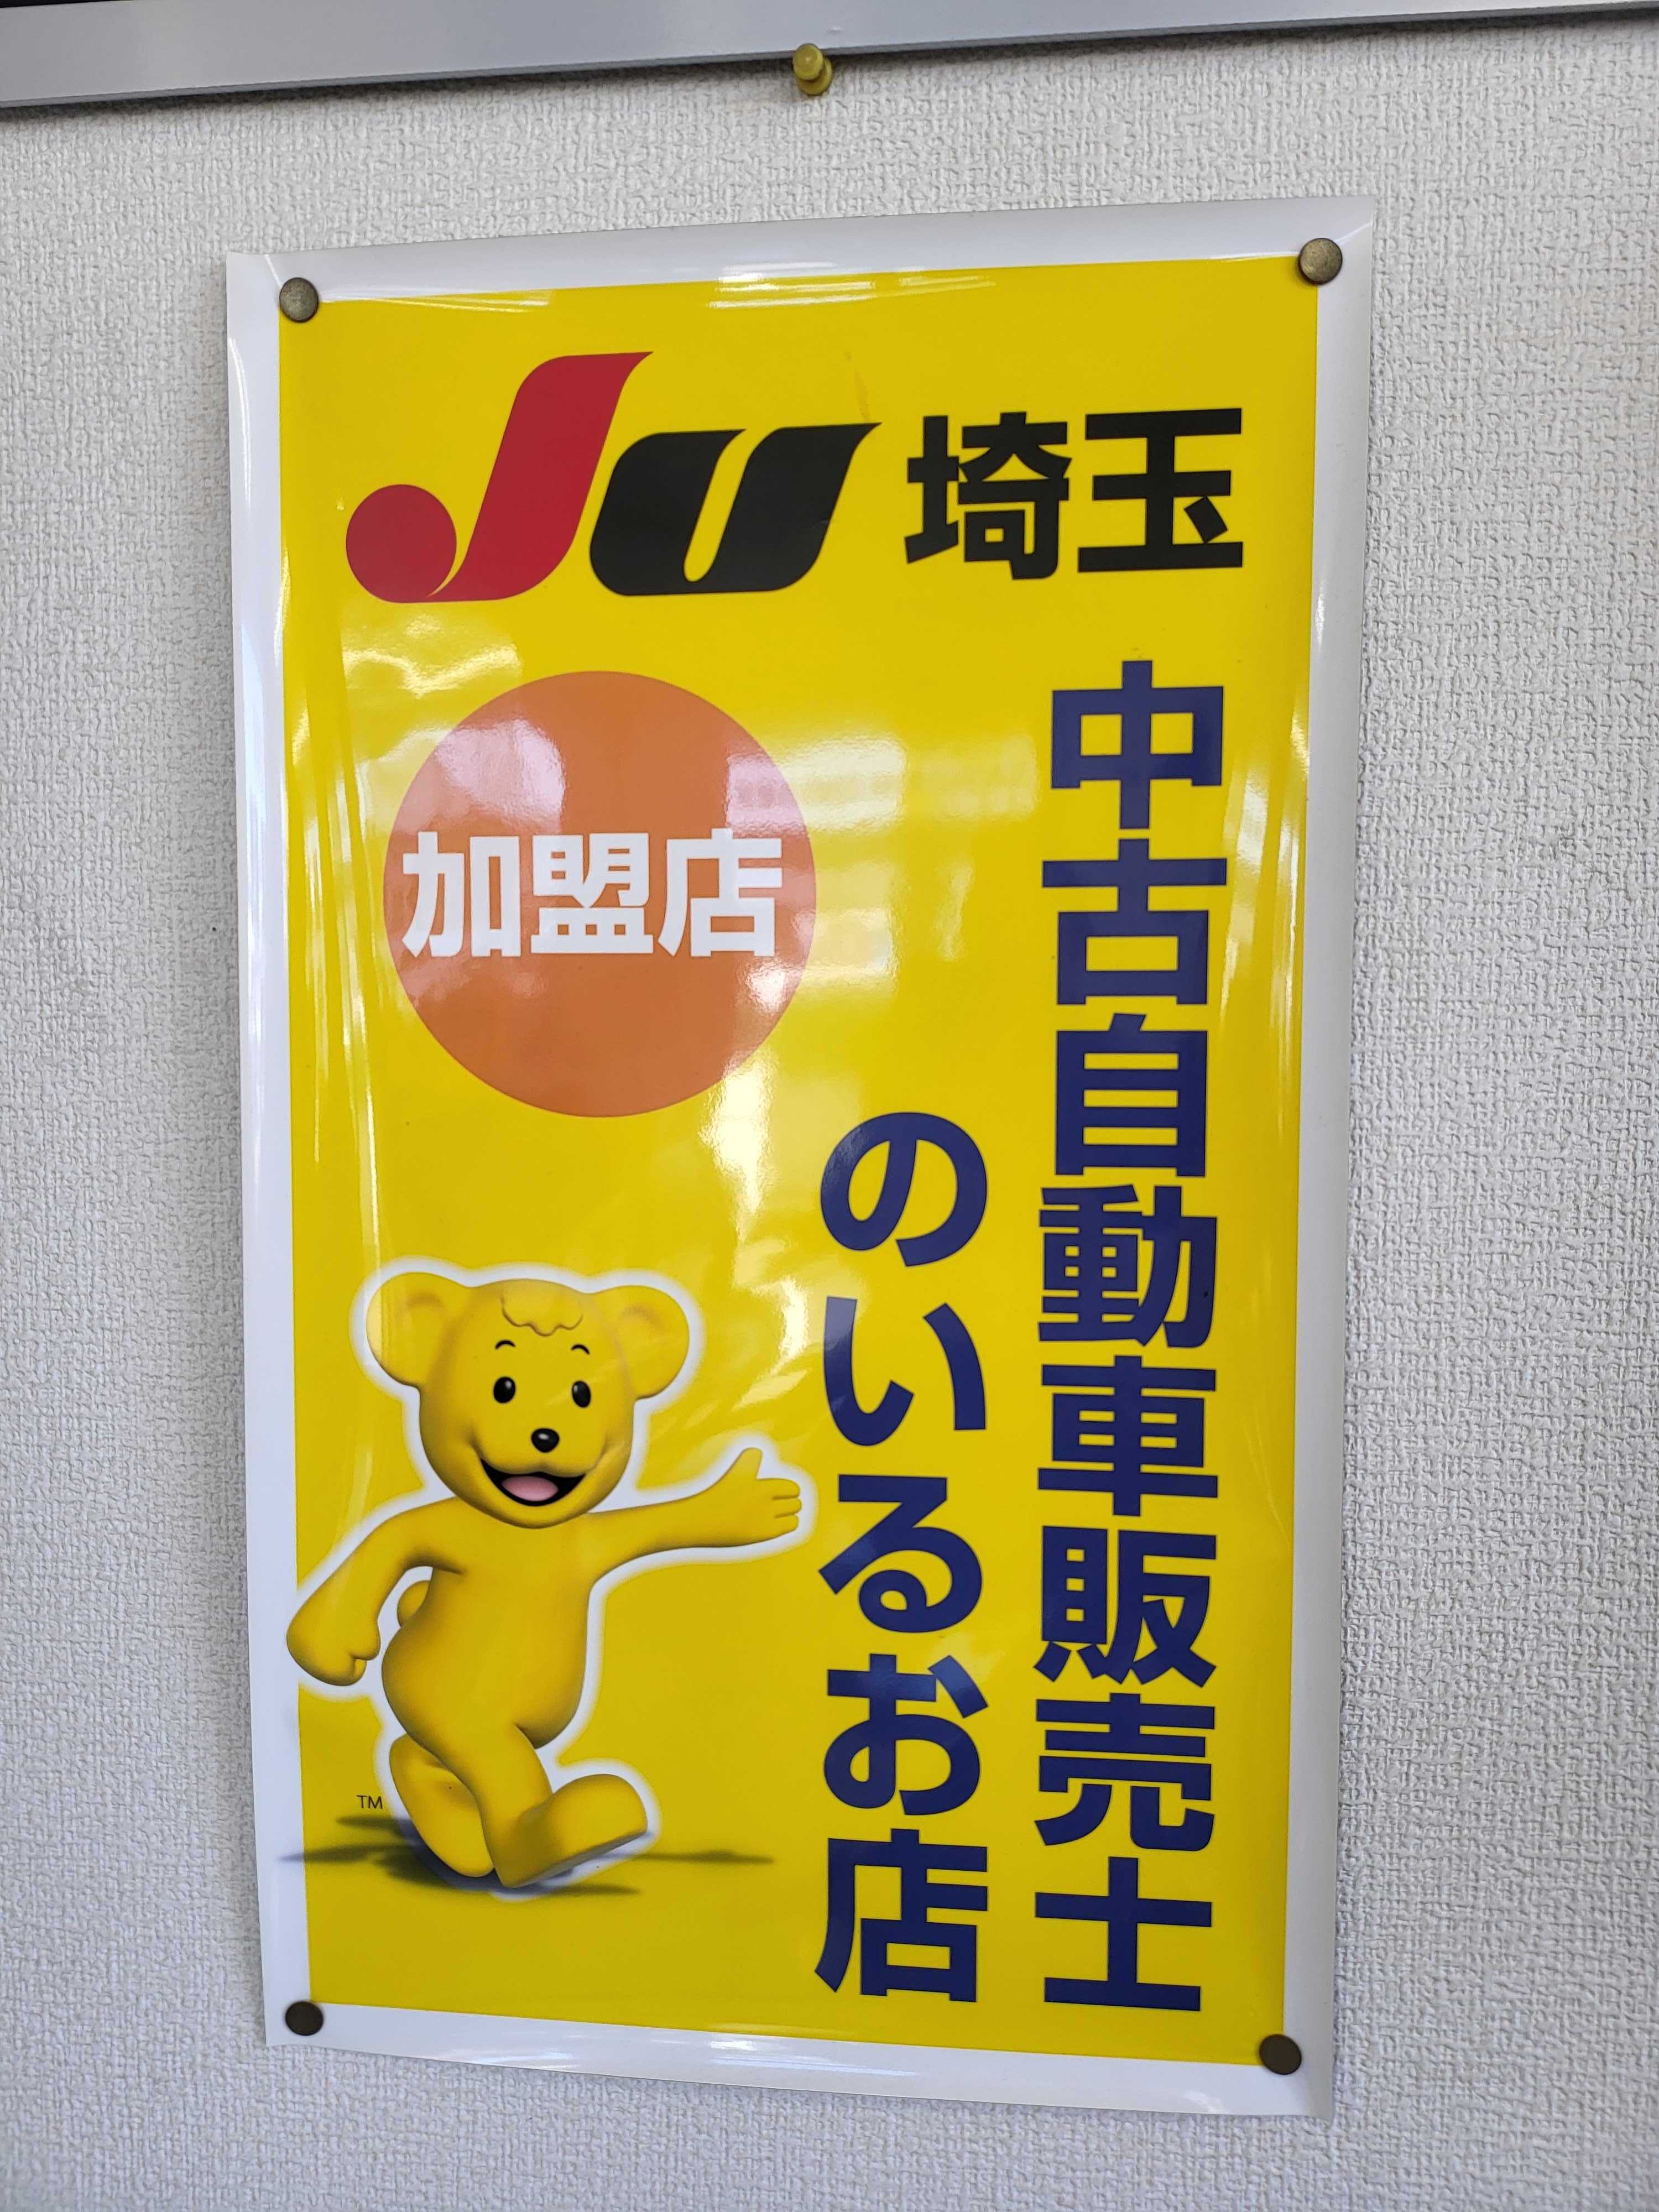 JU(中古自動車販売商工組合)